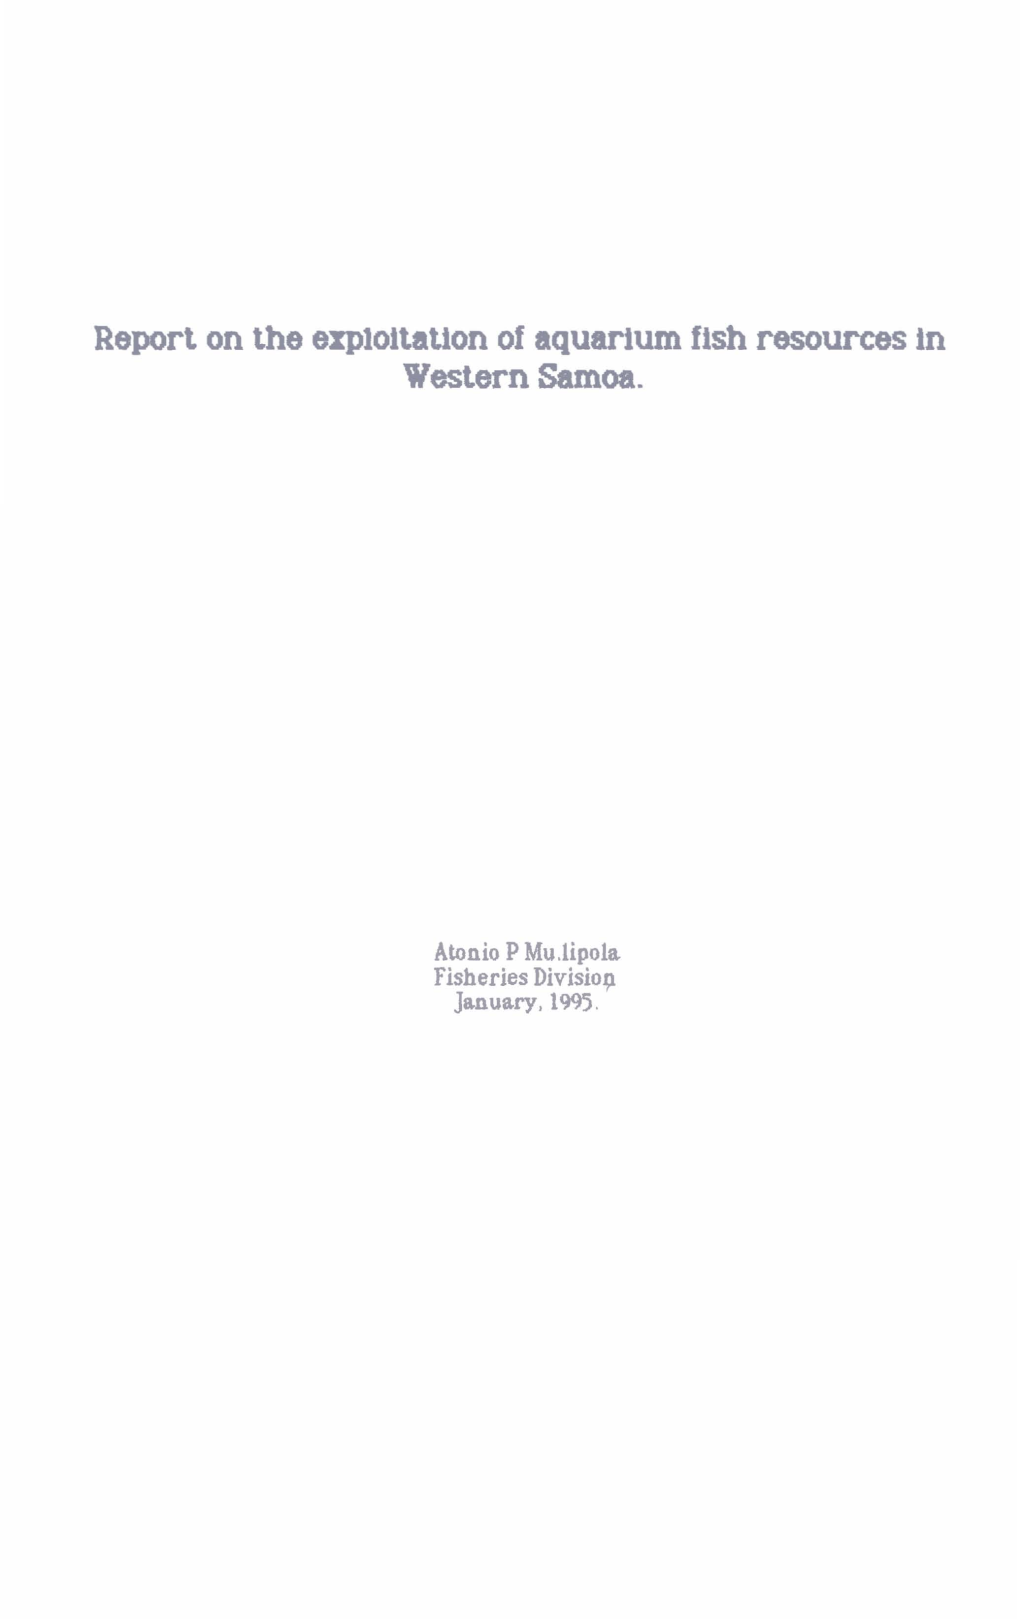 Report on the Ezploltauon of Aquarium Fish Resources in Western Samoa